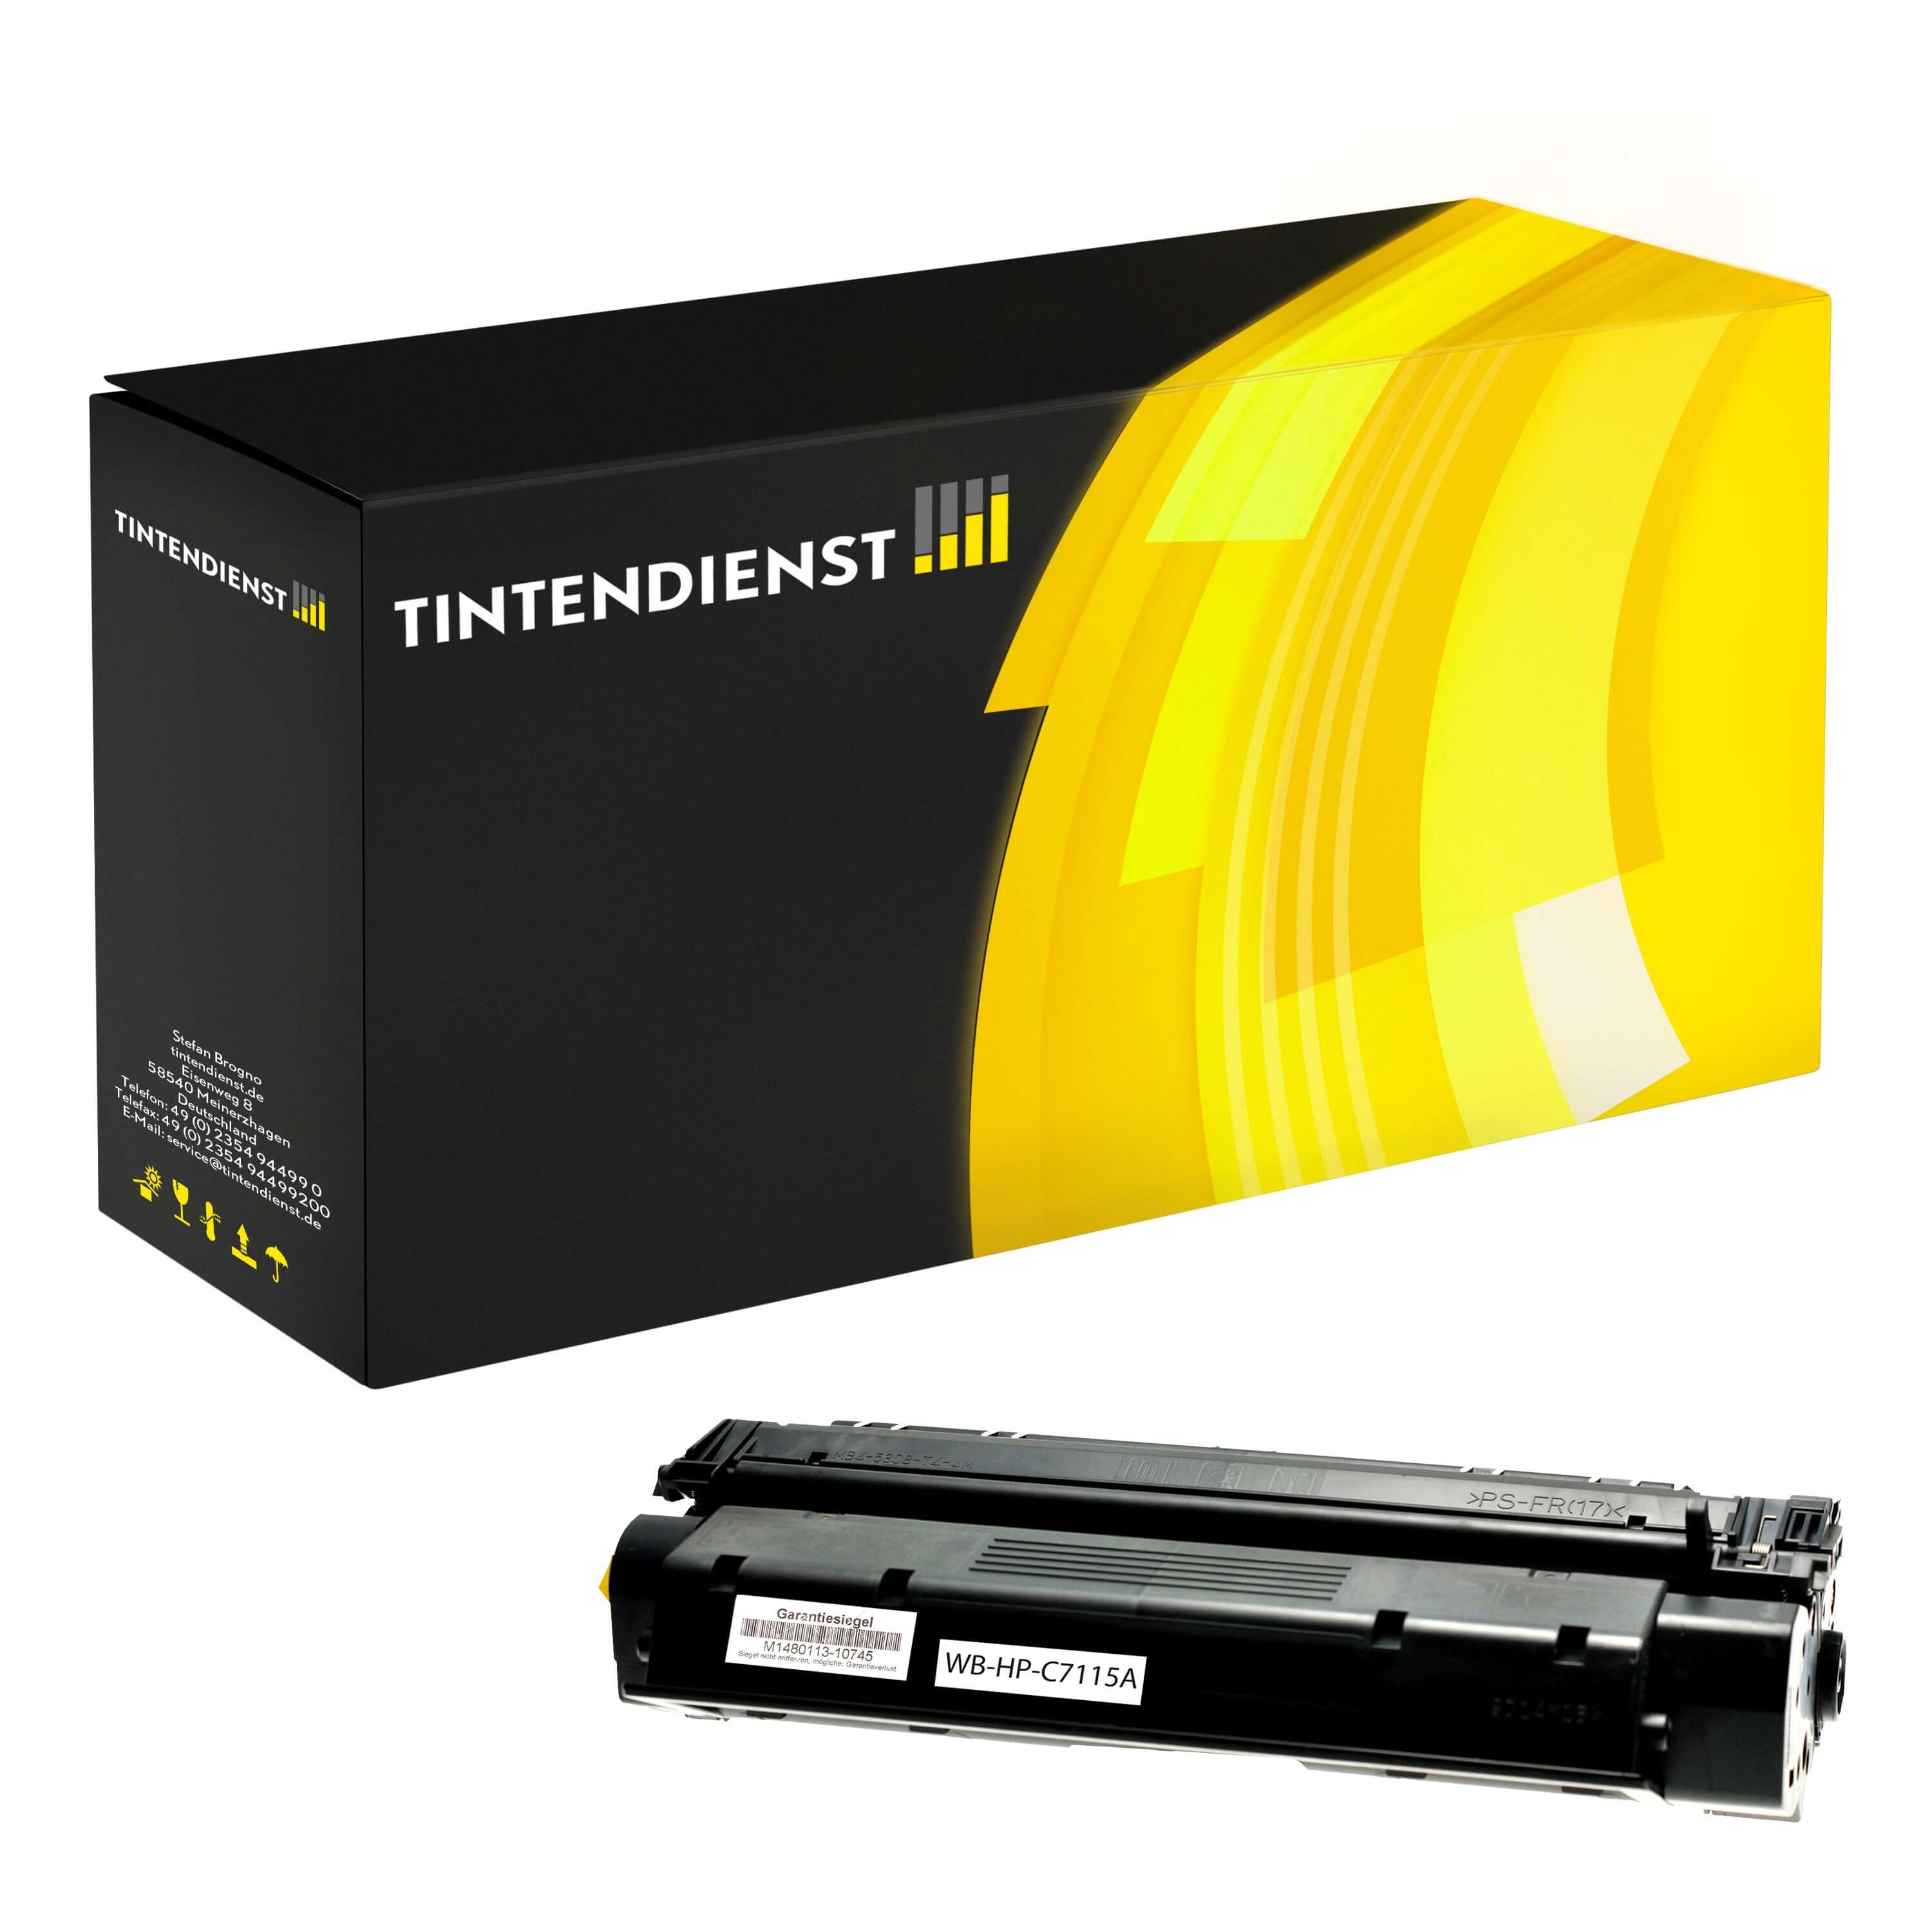 Toner kompatibel für HP LaserJet 3320 N (C7115A / 15A) Schwarz